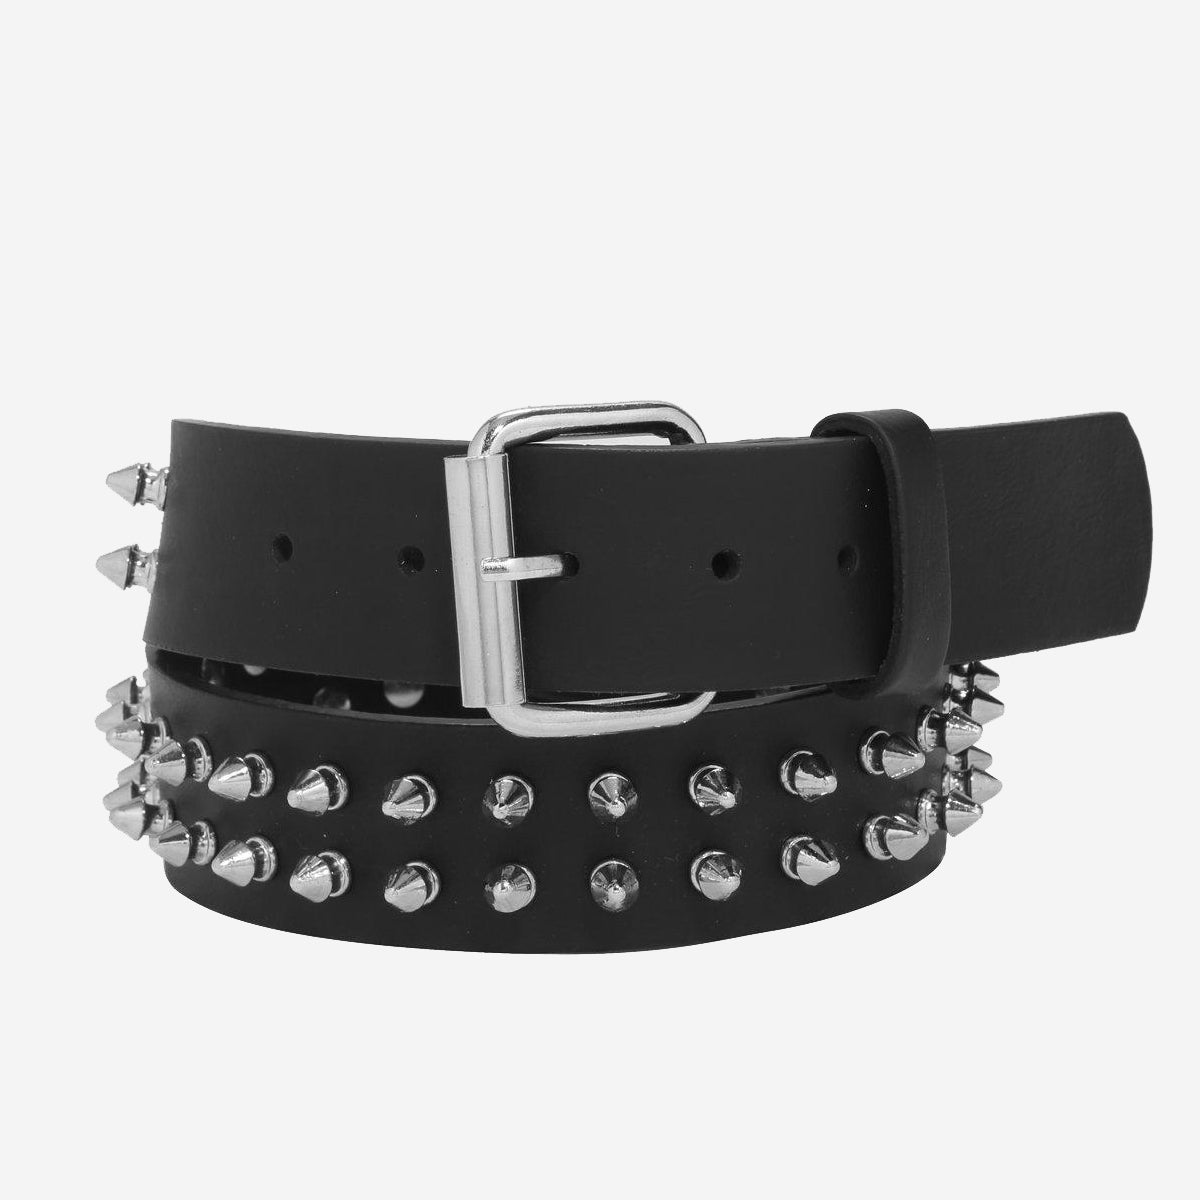 Spiked Studded Leather belt 2 row black - Shop-Tetuan